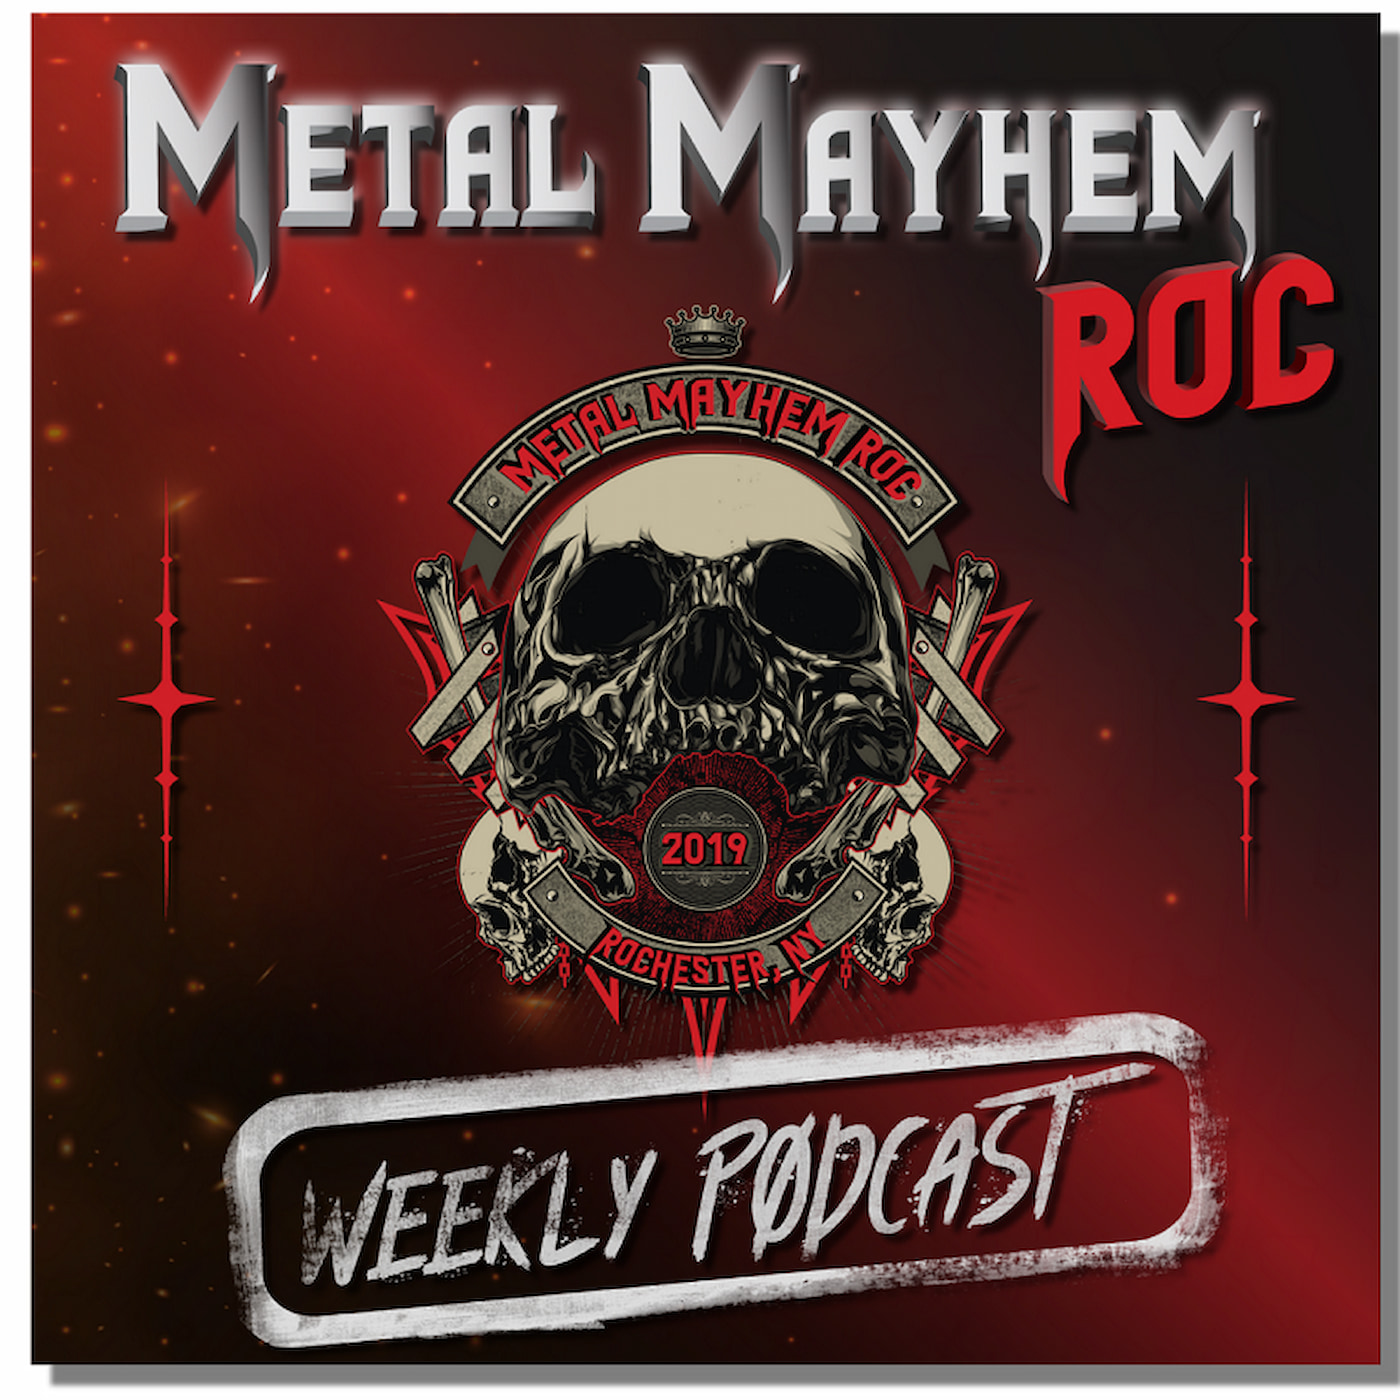 Metal Mayhem ROC Image